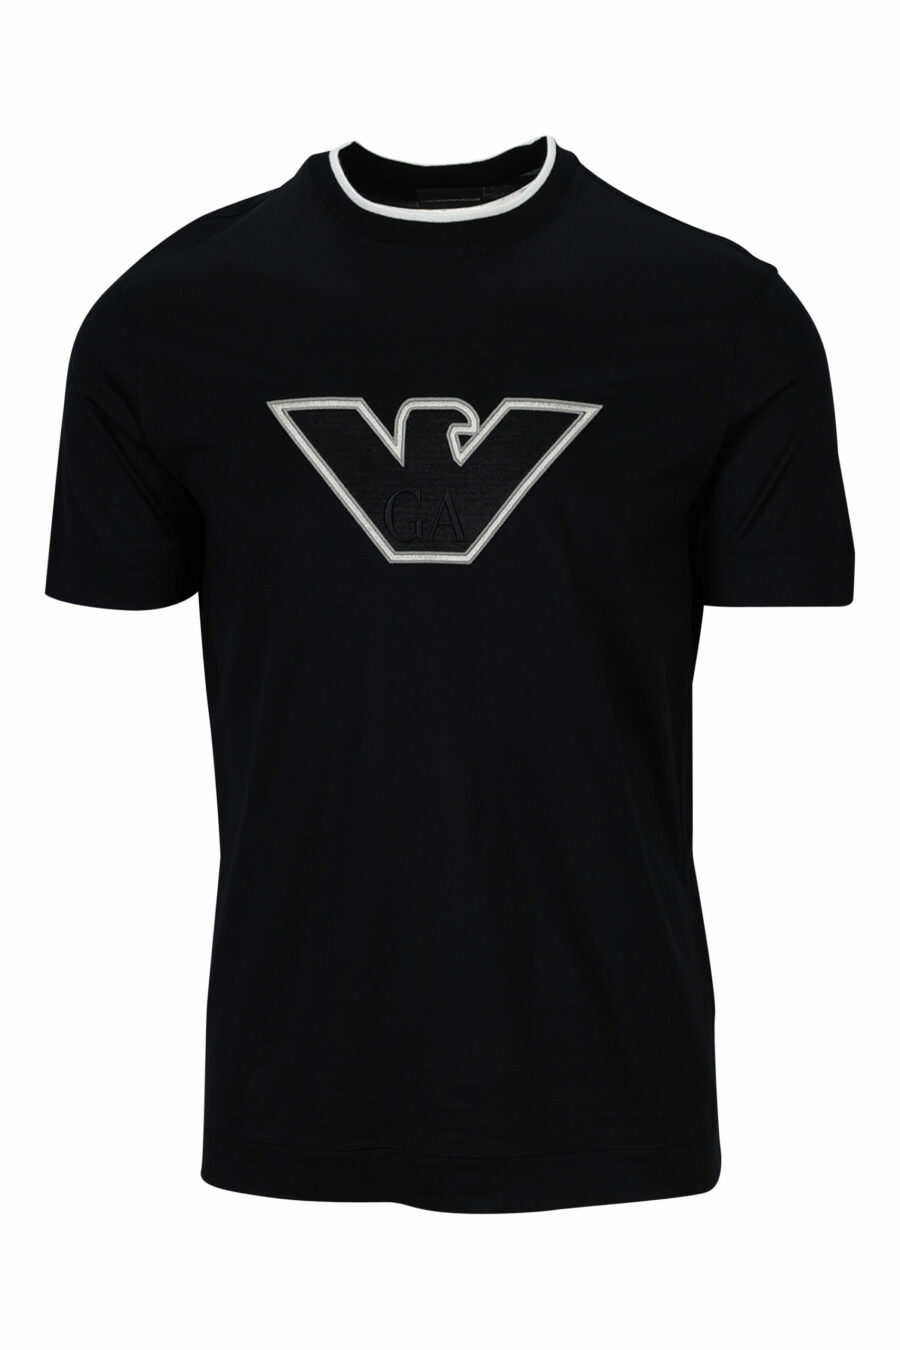 T-shirt noir avec maxilogo aigle blanc - 8057767554040 scaled